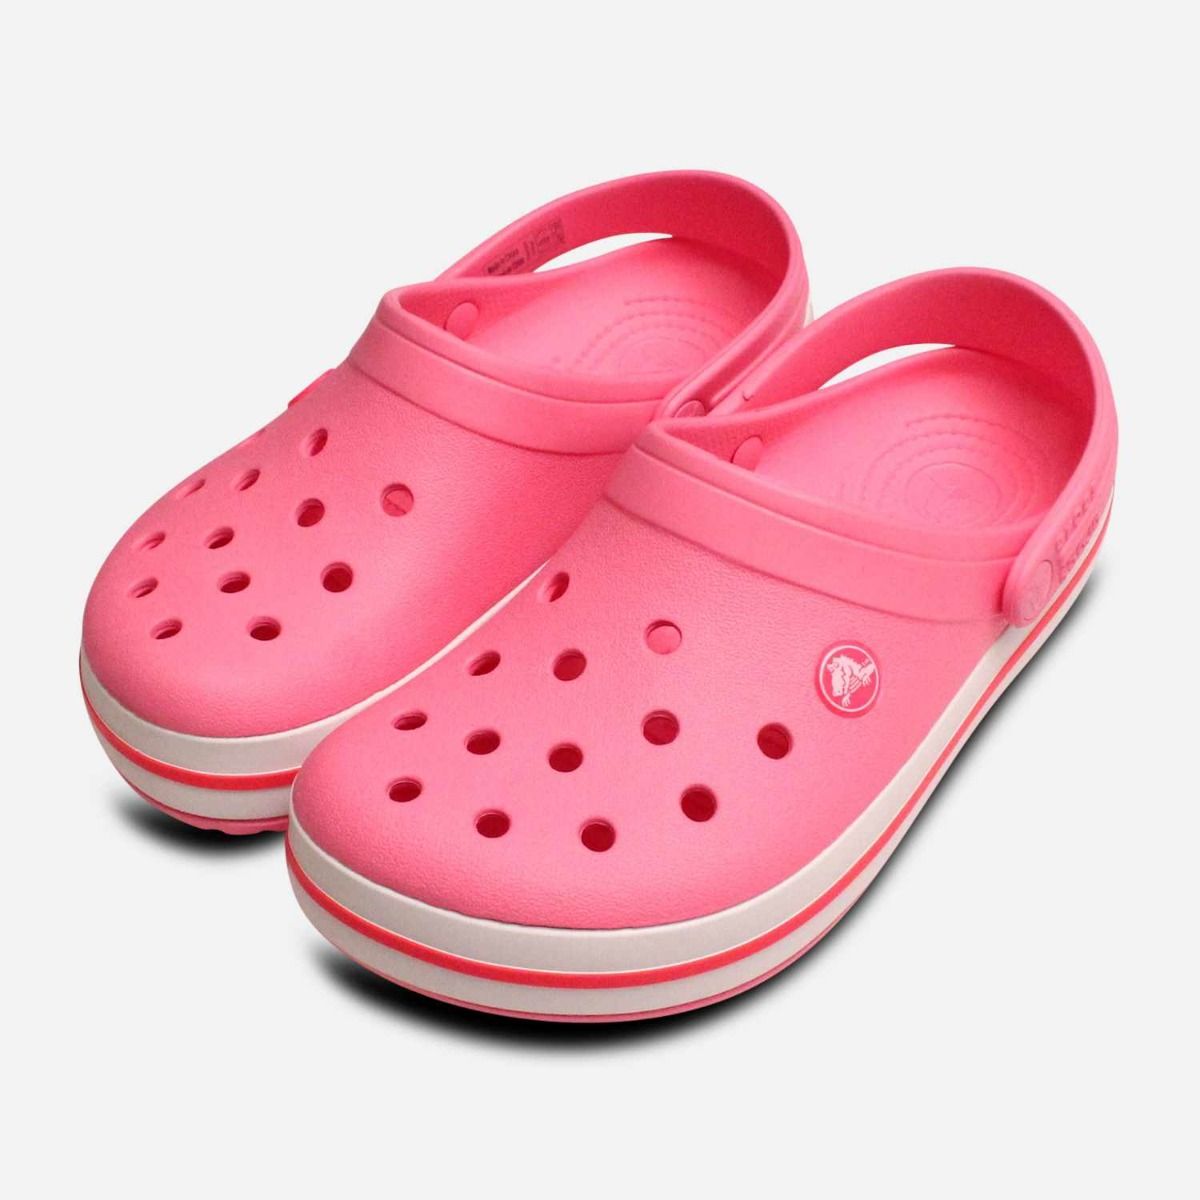 Hyper pink platforms <3 : r/crocs